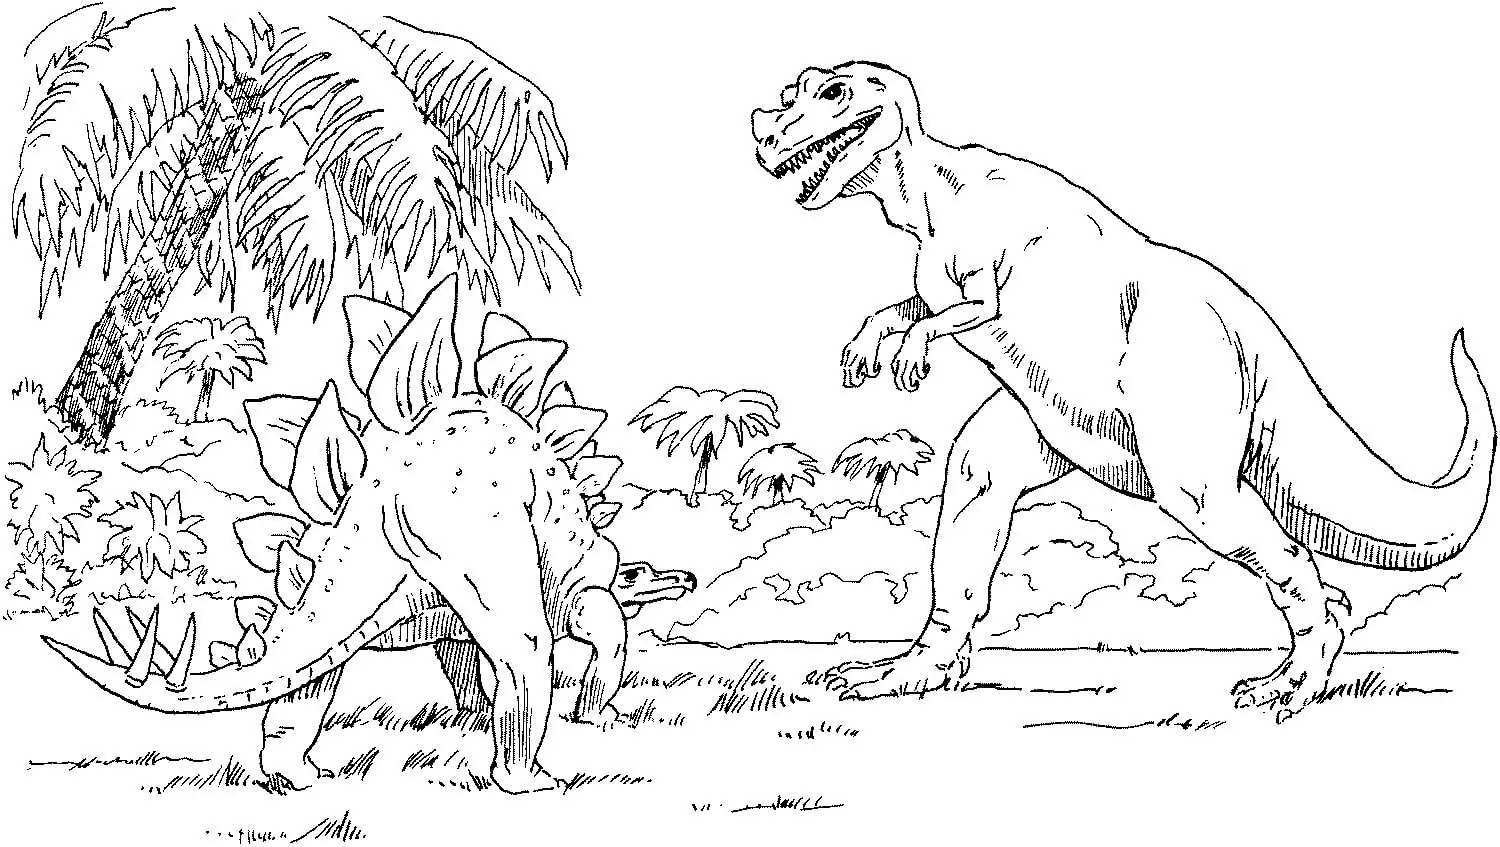 Tyrannosaurus and stegosaurus